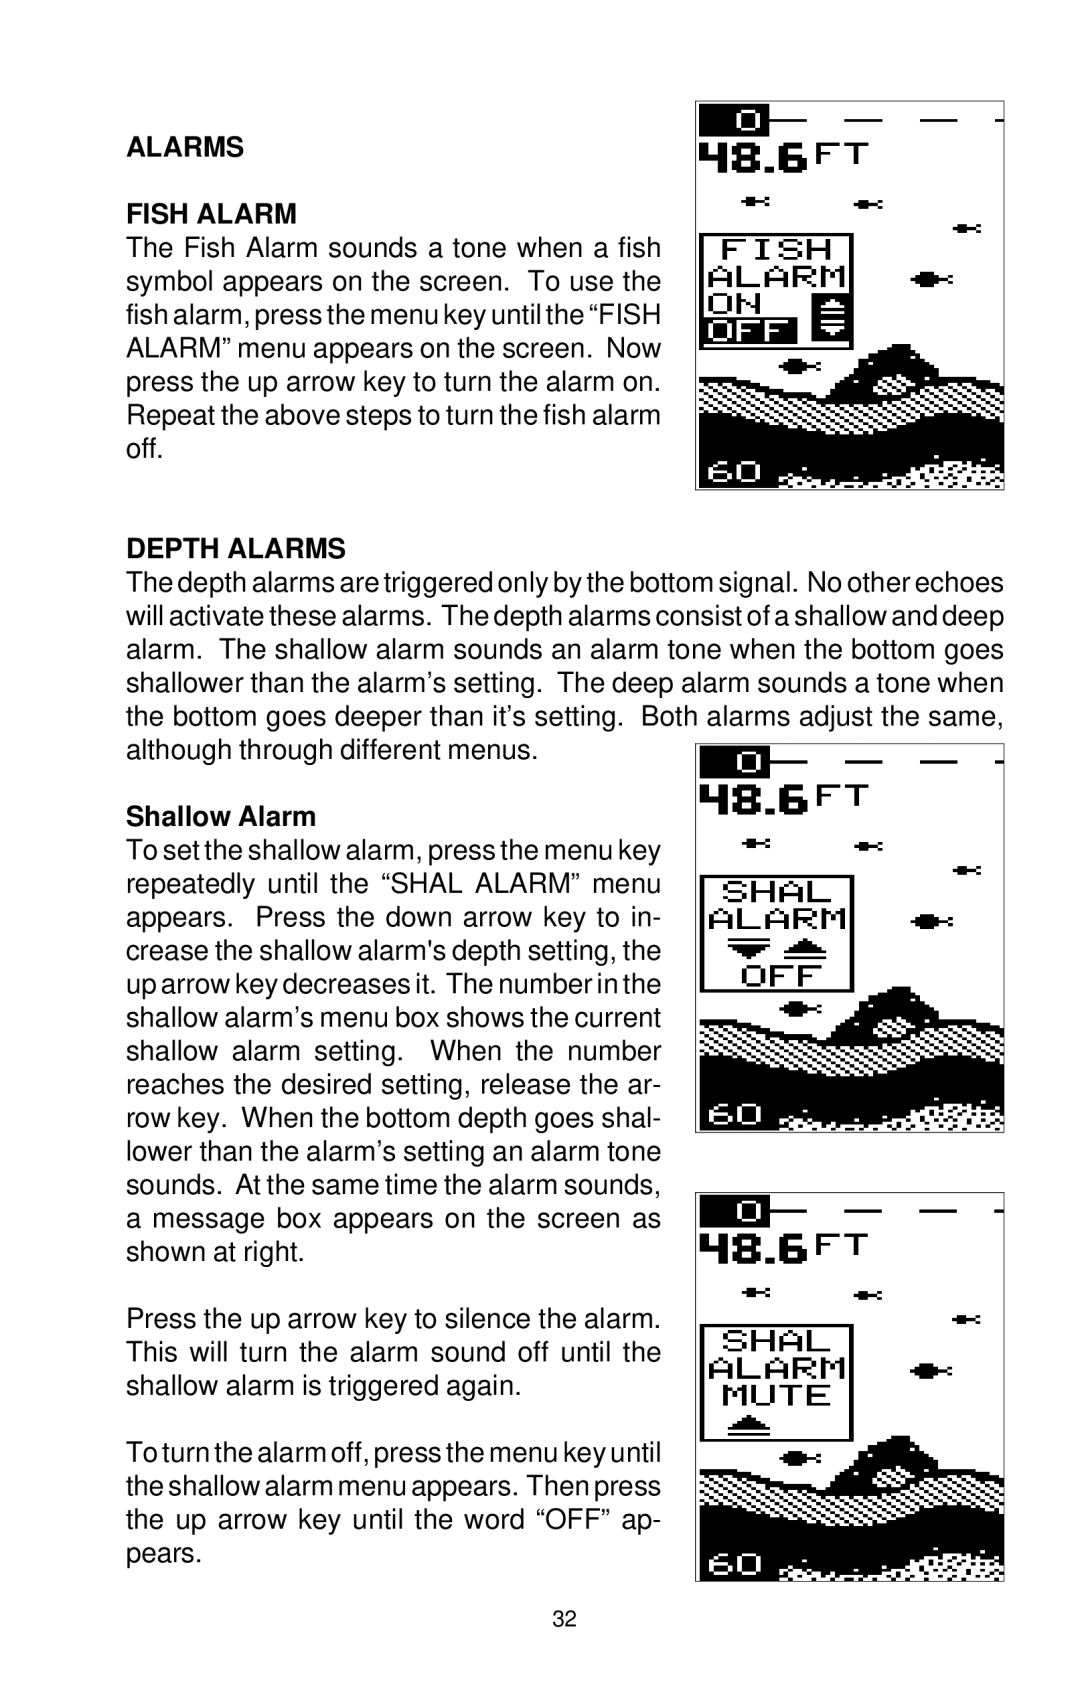 Eagle Electronics 128 manual Alarms Fish Alarm, Depth Alarms, Shallow Alarm 